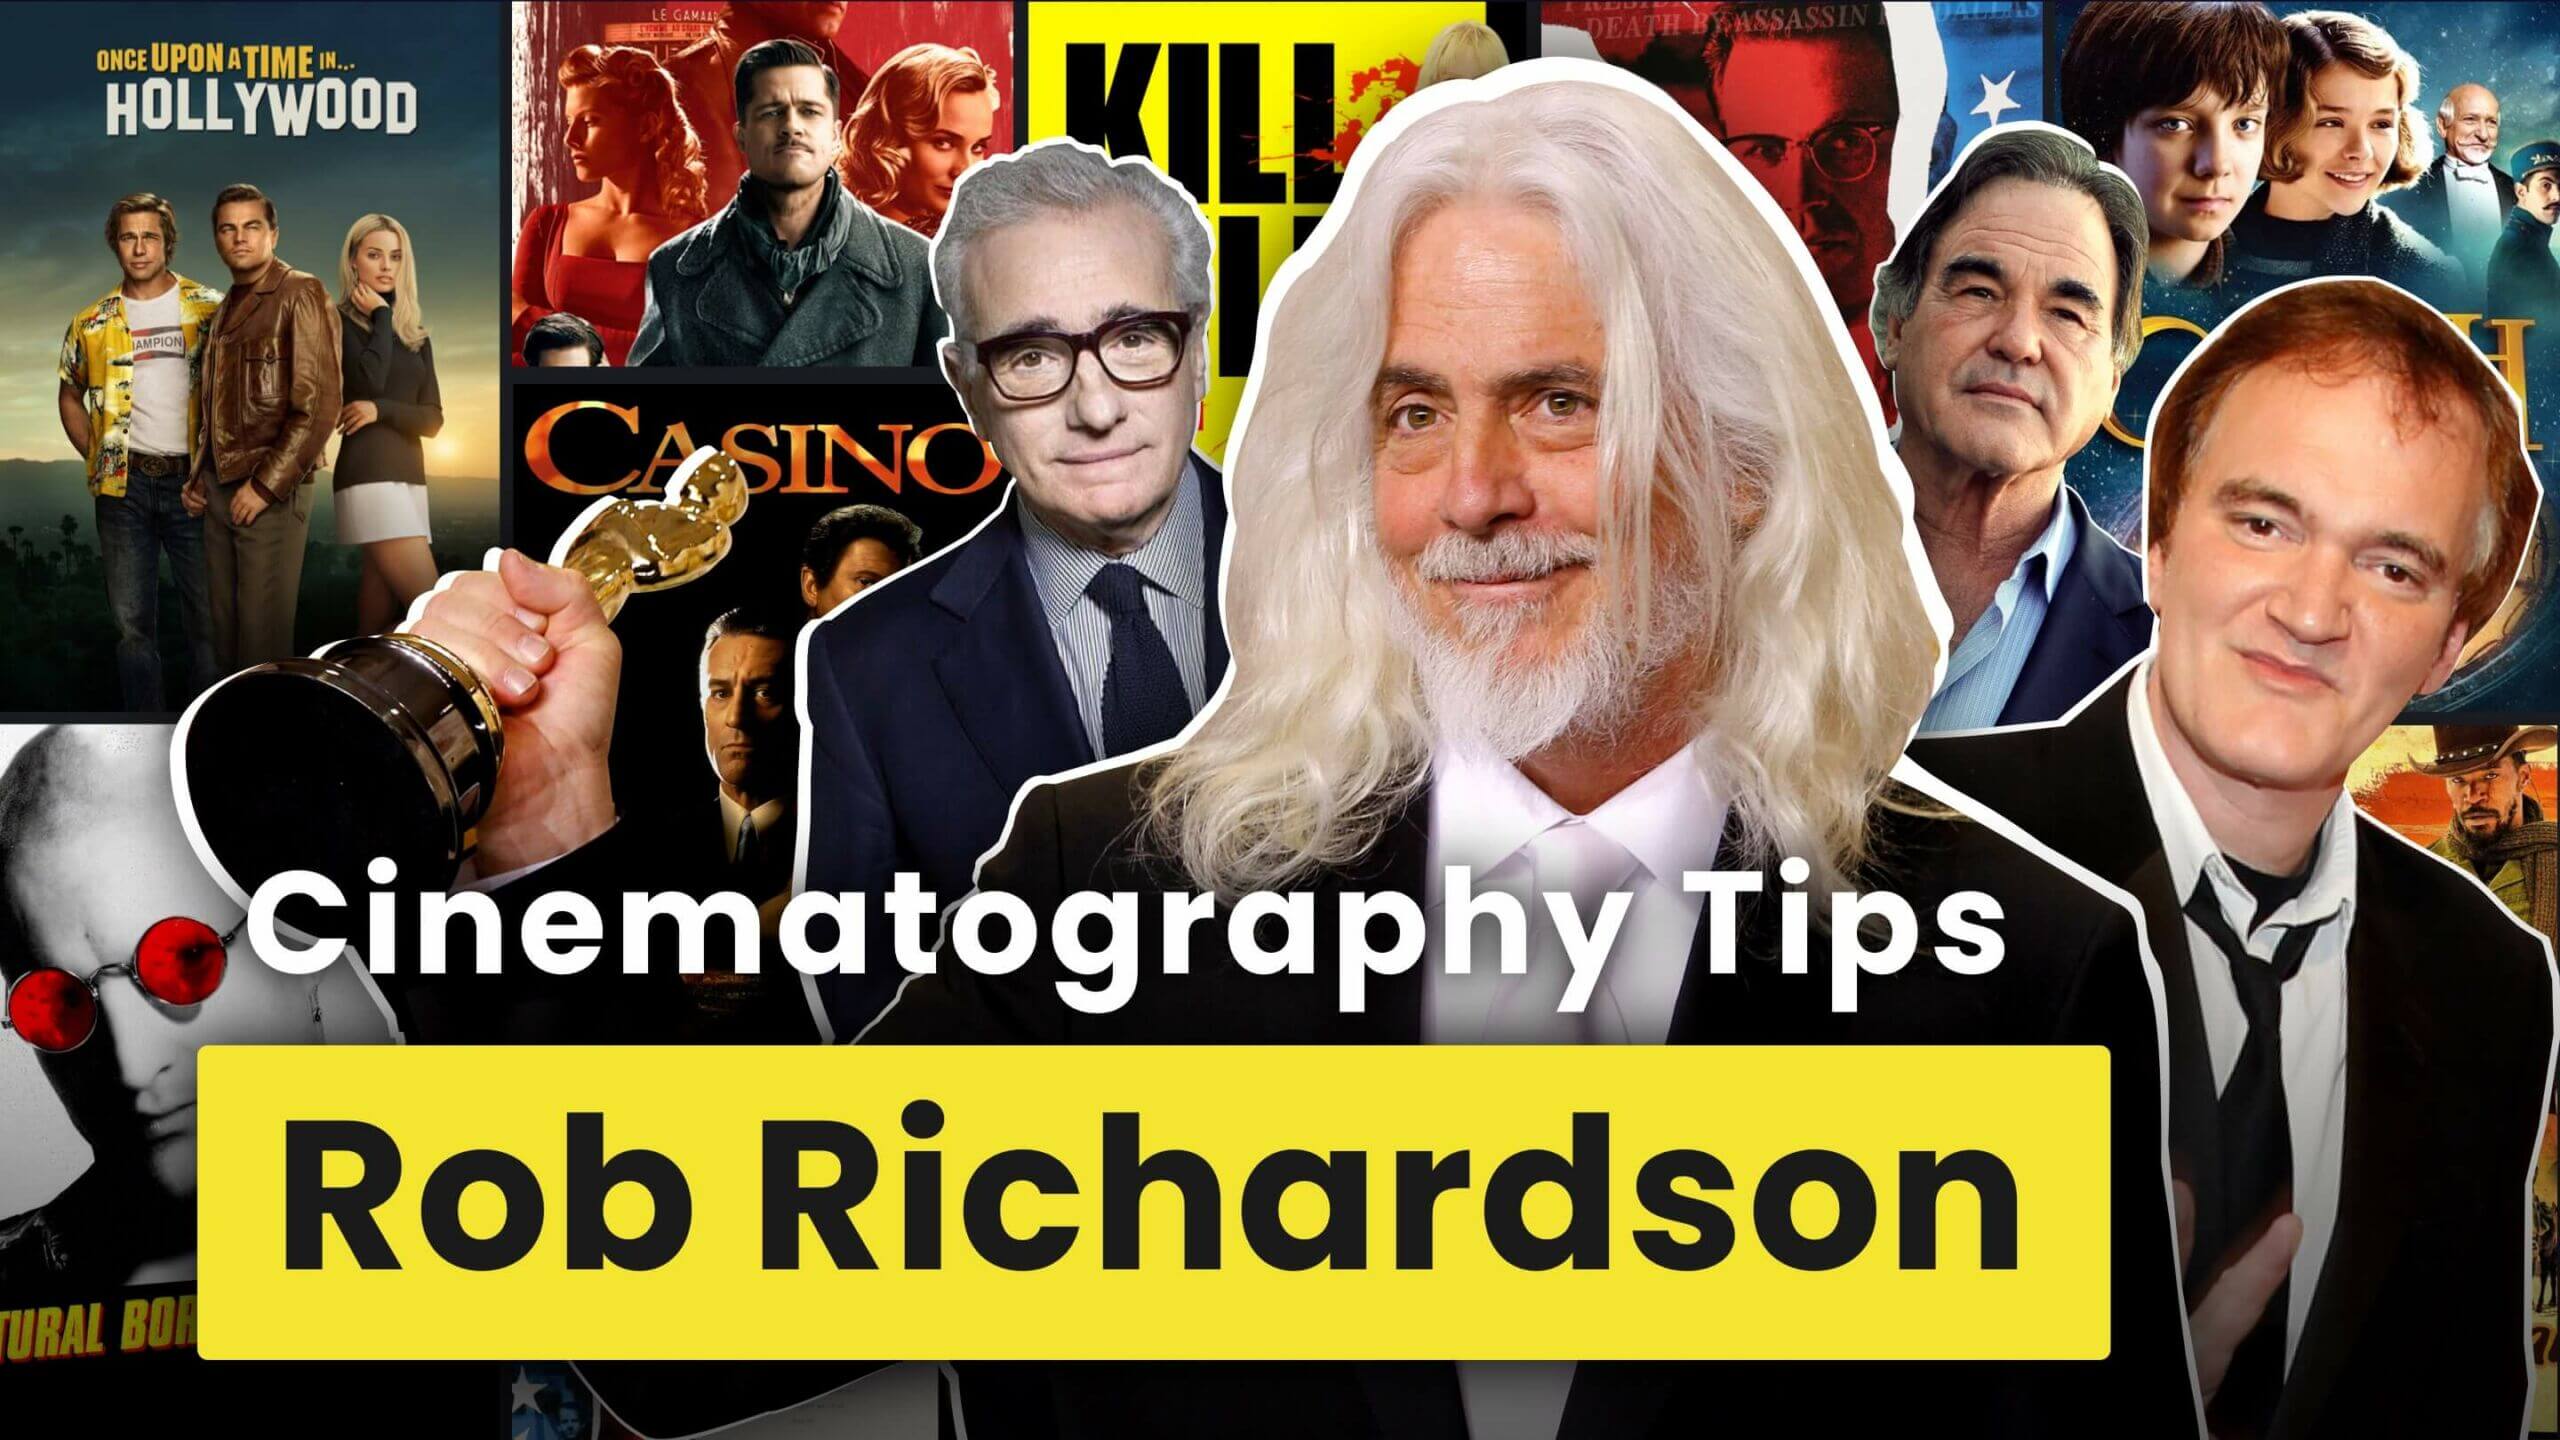 Cinematographer Robert Richardson Style - Learn Cinematography Tips from Rob Richardson - Social